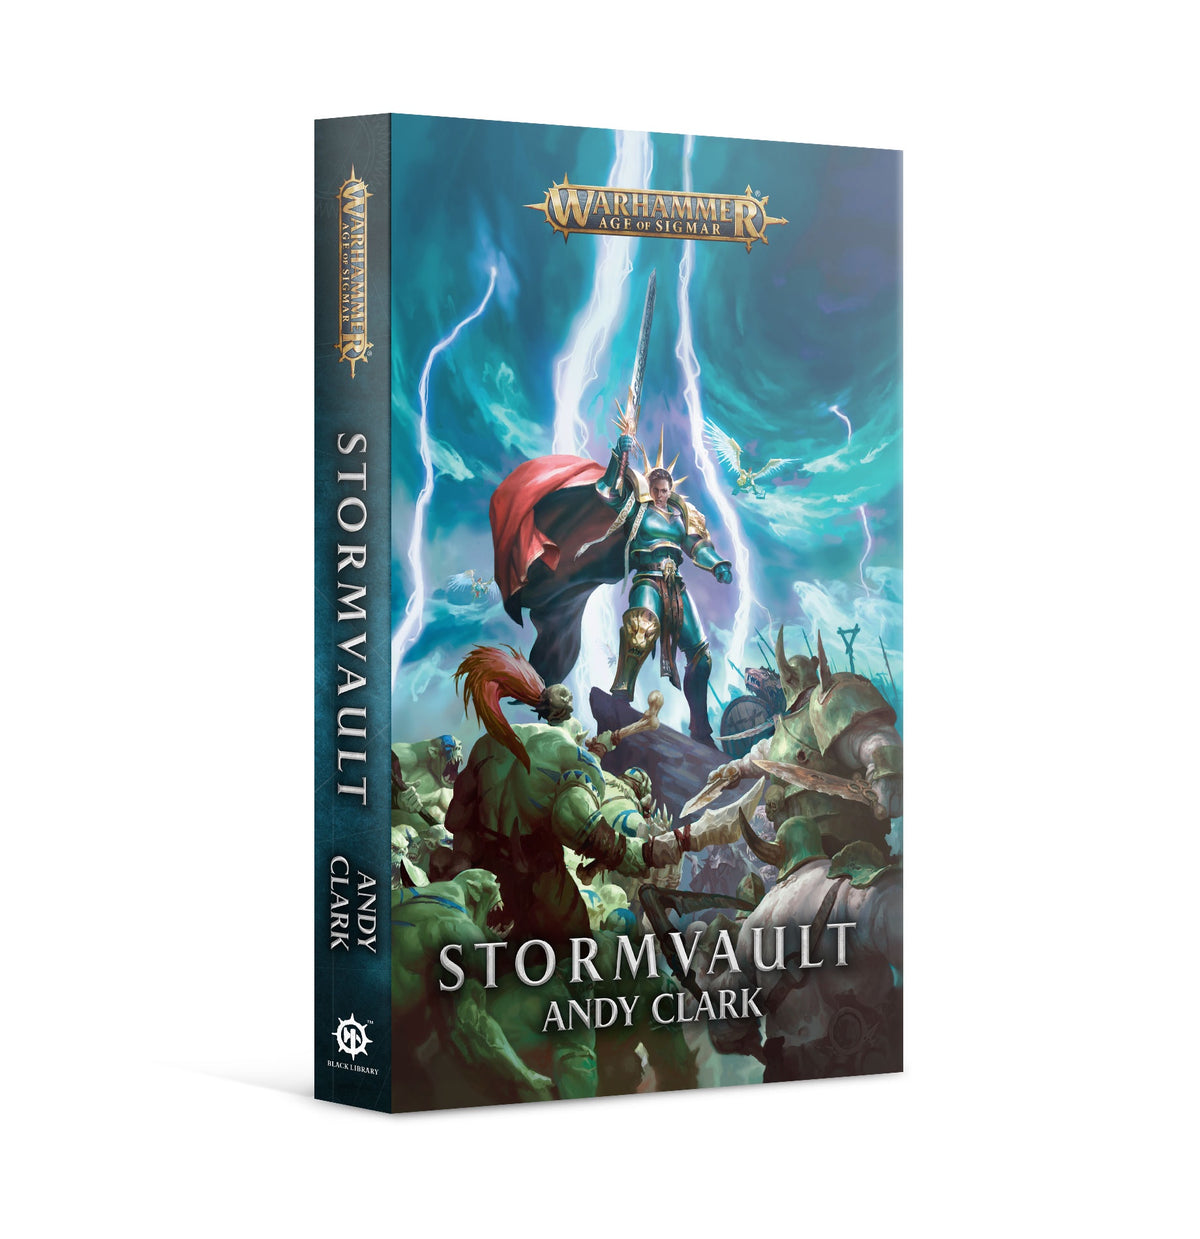 Stormvault (Novel PB)